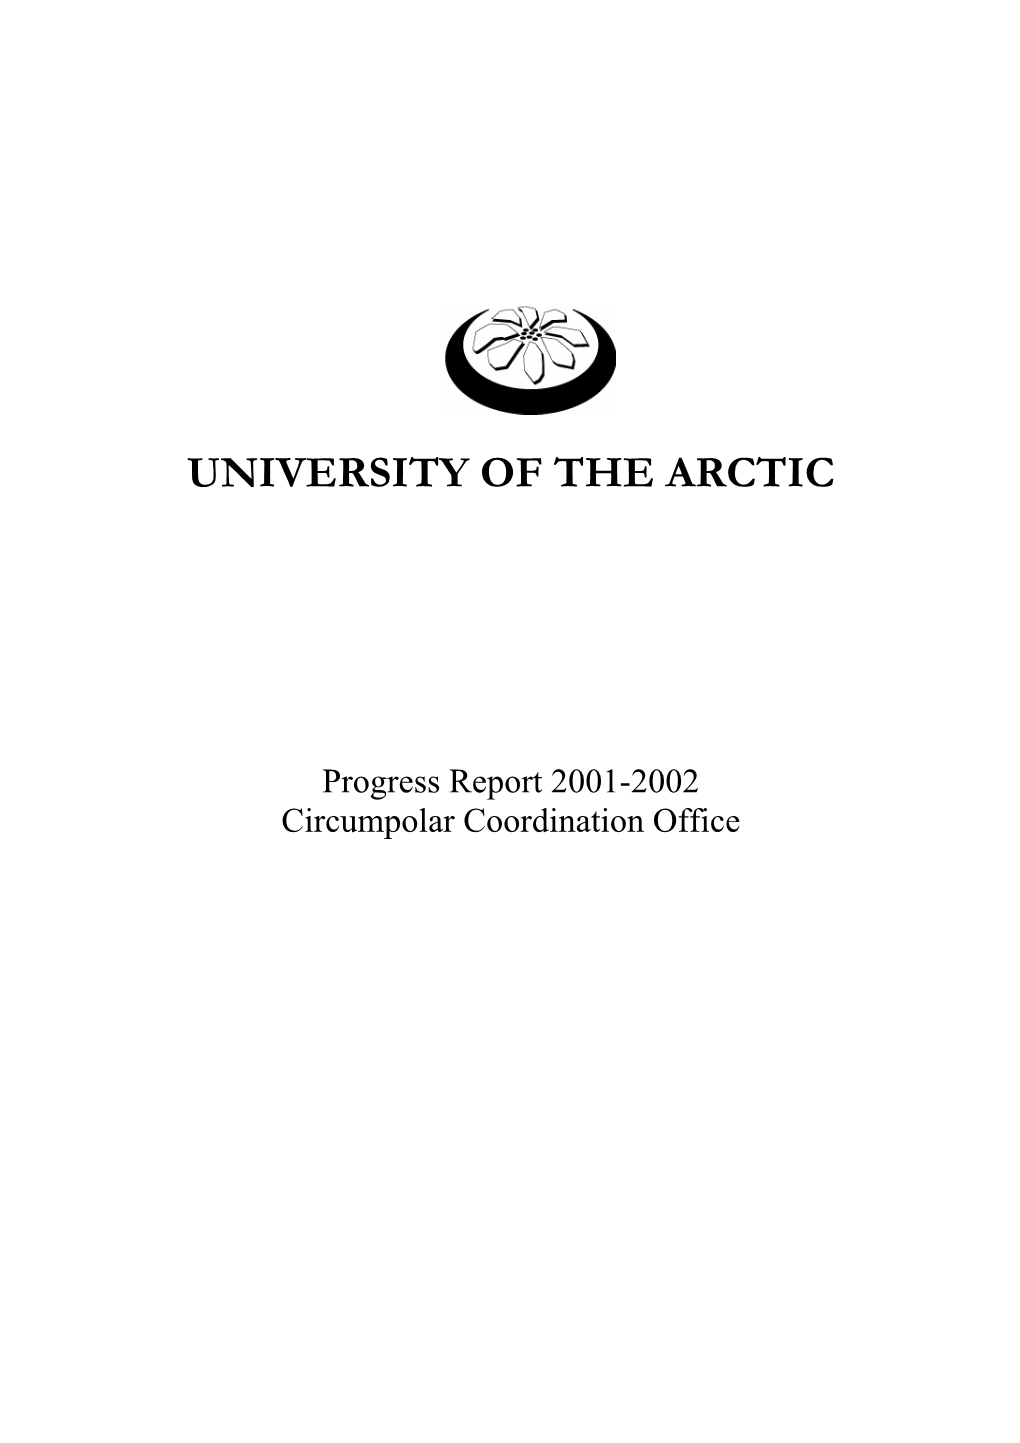 Progress Report 2002